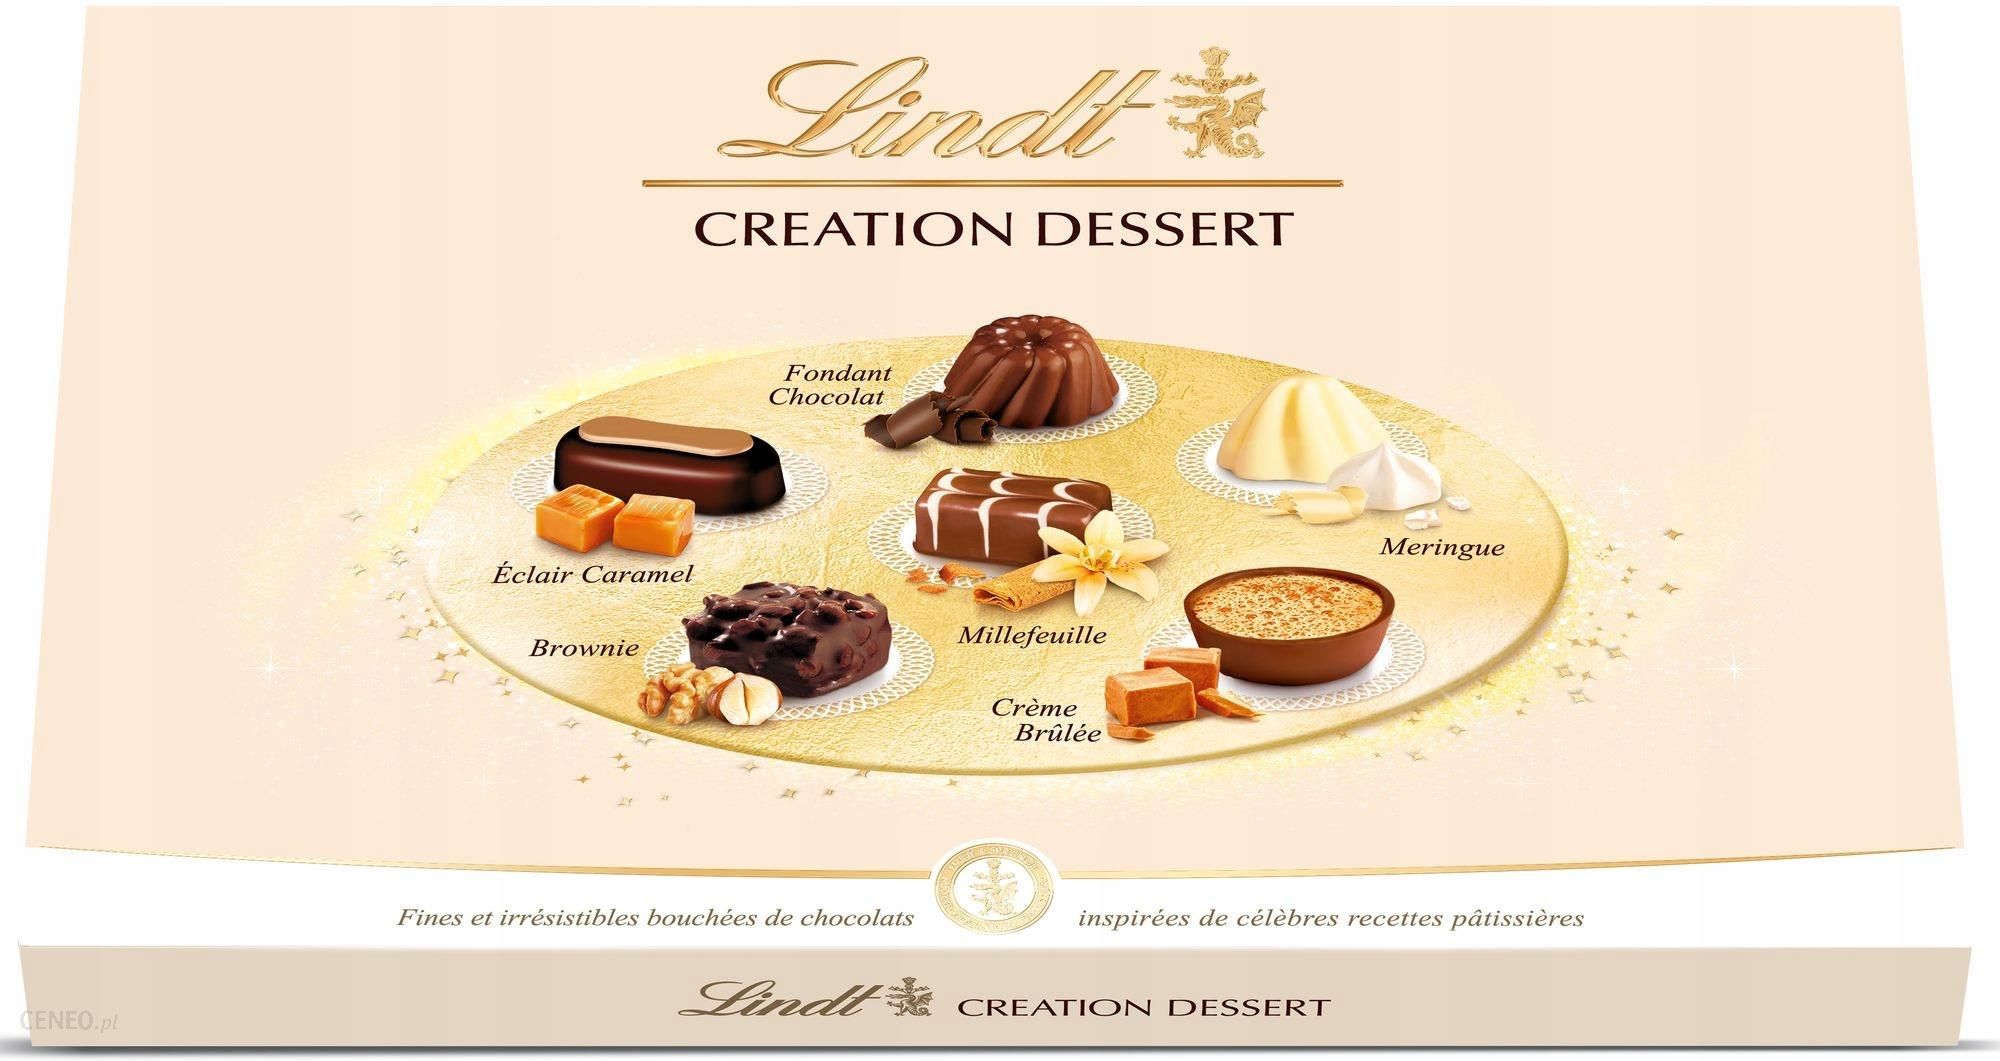 Lindt Creation Dessert, 14.11 oz 